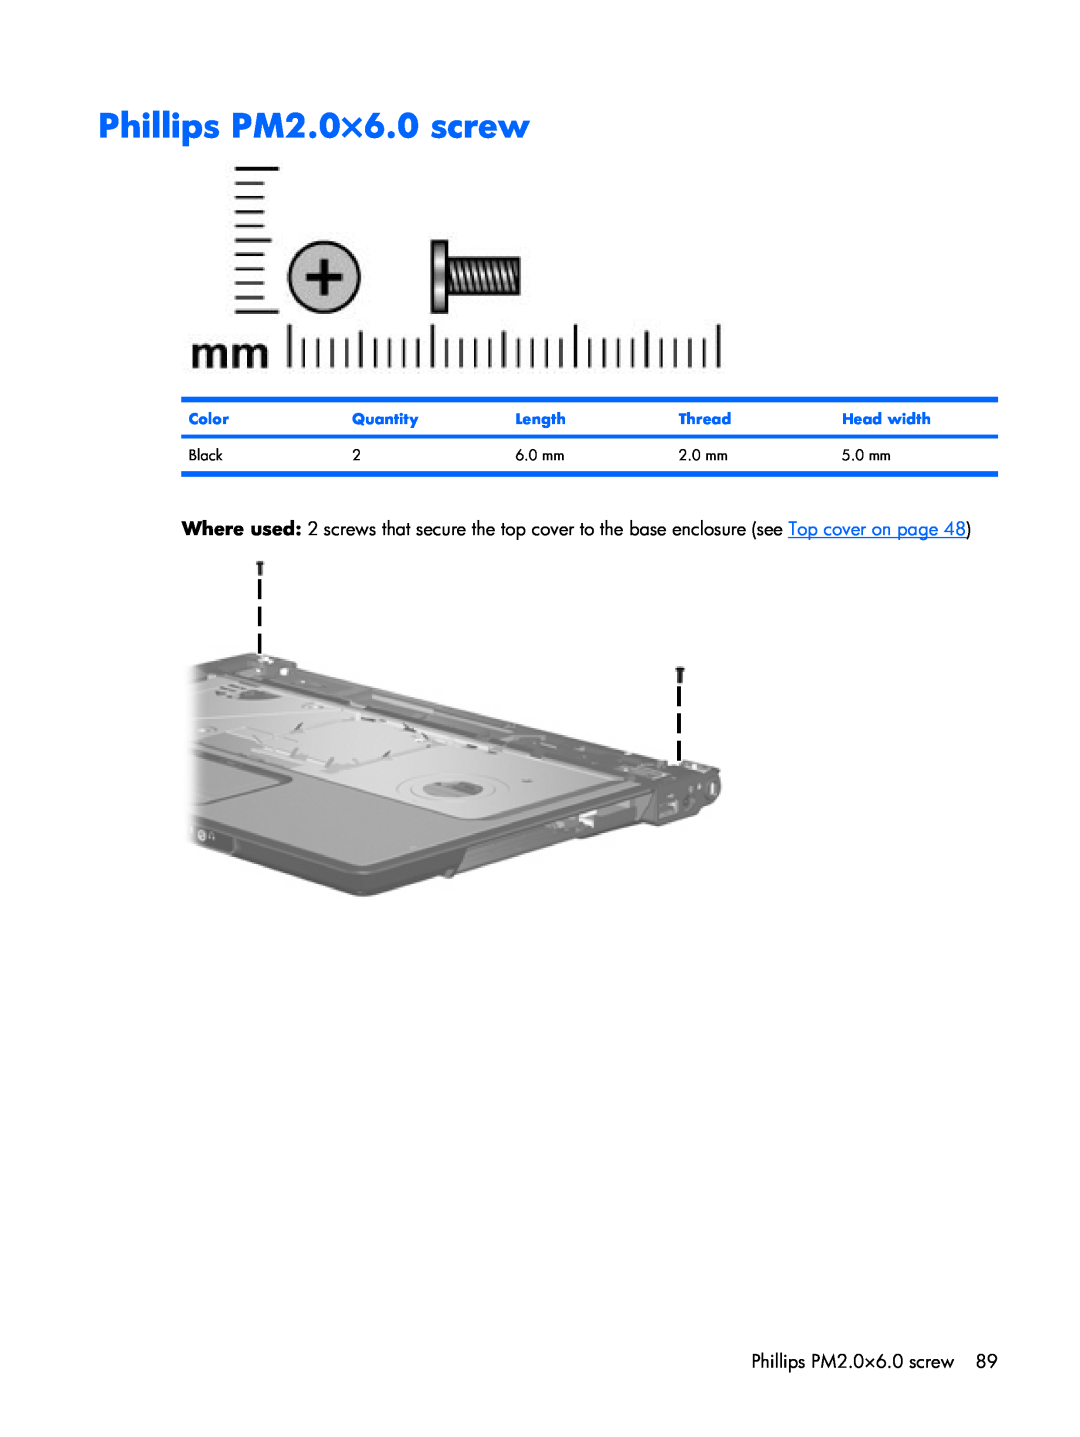 Compaq F500 manual Phillips PM2.0×6.0 screw, Color, Quantity, Length, Thread, Head width, Black, 6.0 mm, 2.0 mm, 5.0 mm 